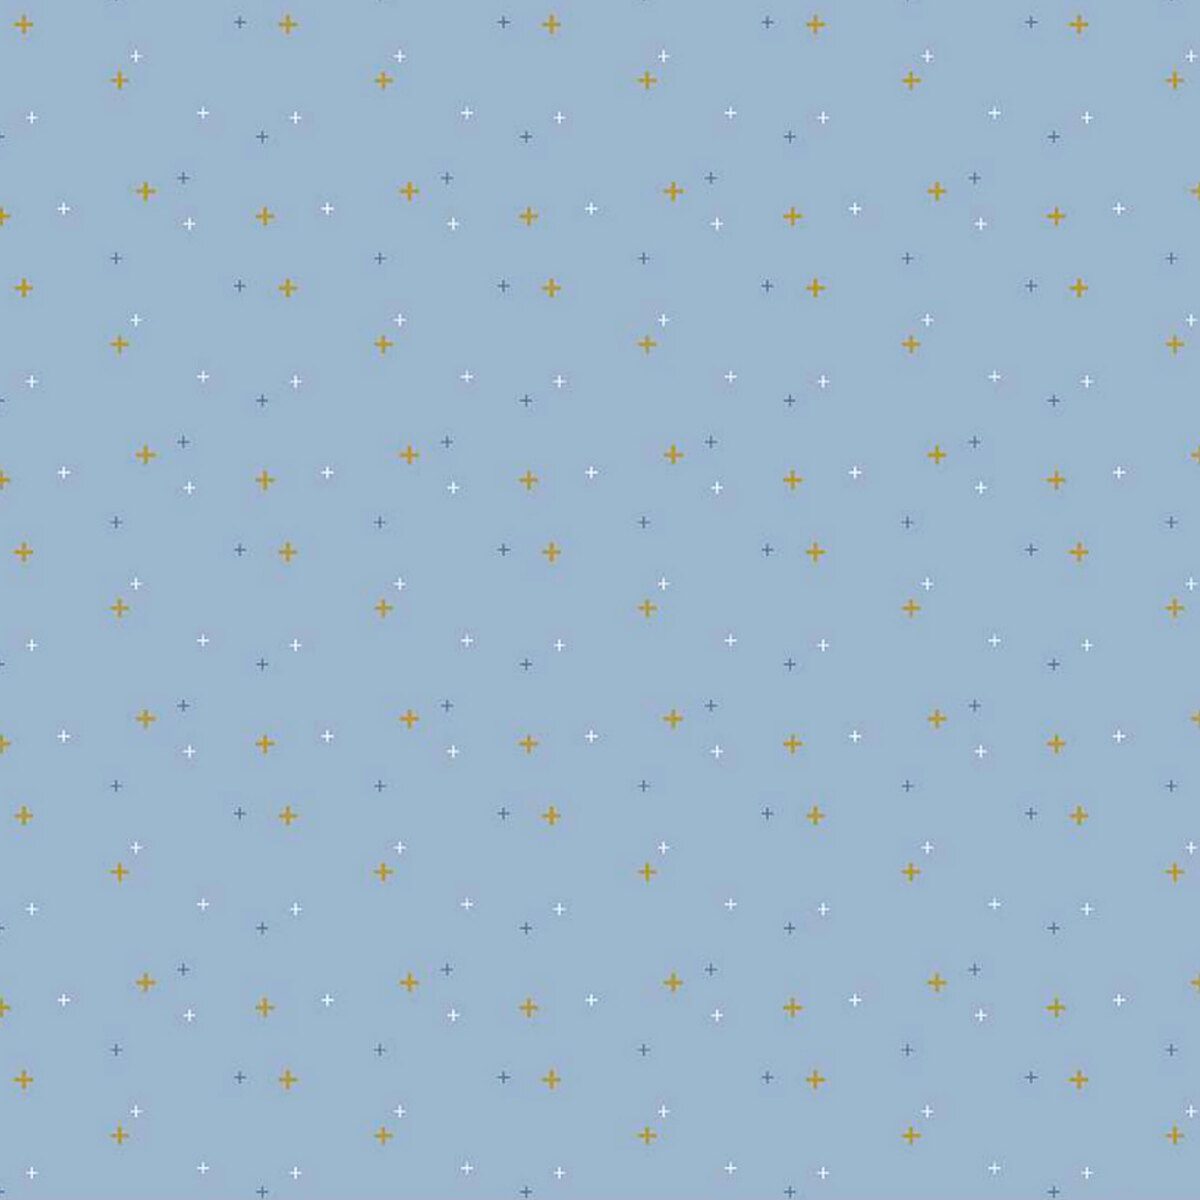 Sparkler SC650-Lake Blue by Riley Blake Designs | Shabby Fabrics